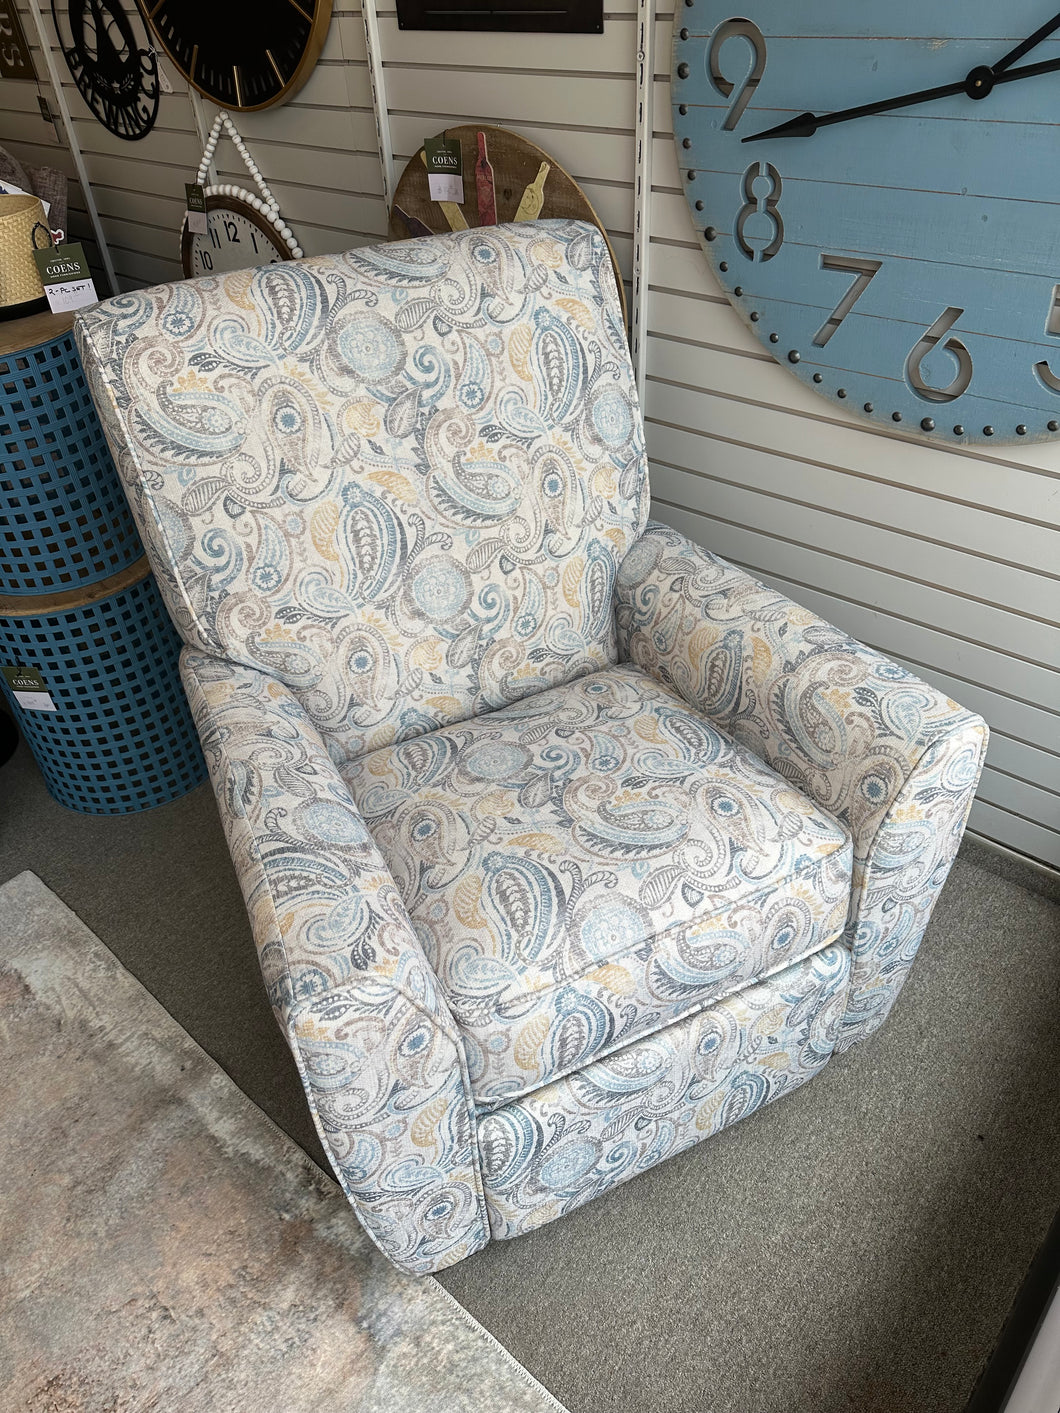 Dora Low Leg Reclining Chair by La-Z-Boy Furniture 255-400 E179085 Serenity